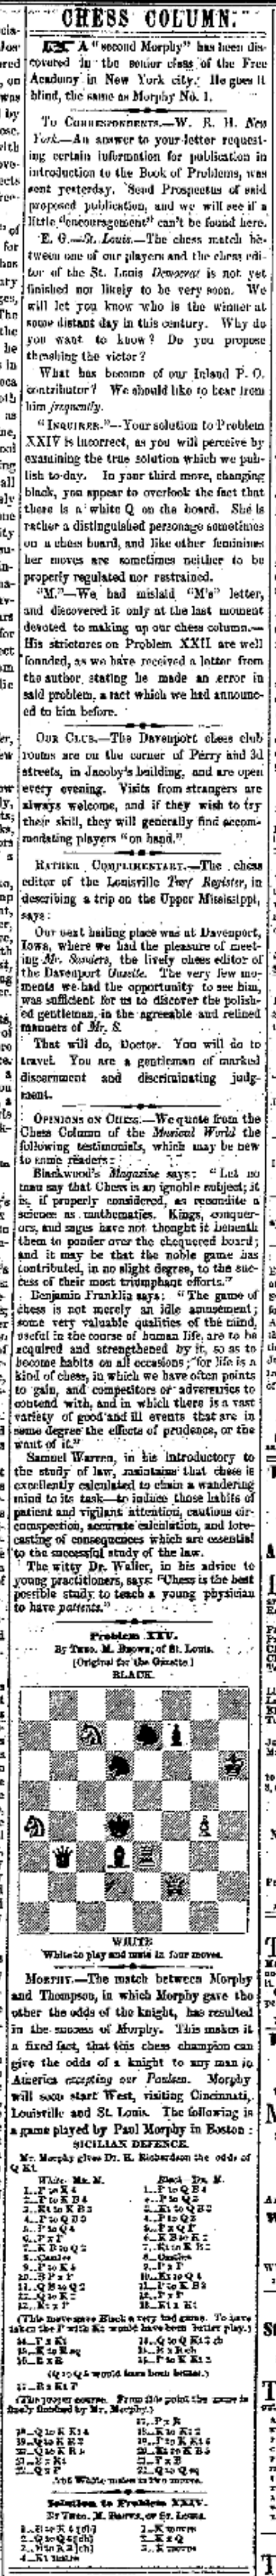 1859.06.24-01 Davenport Daily Gazette.png